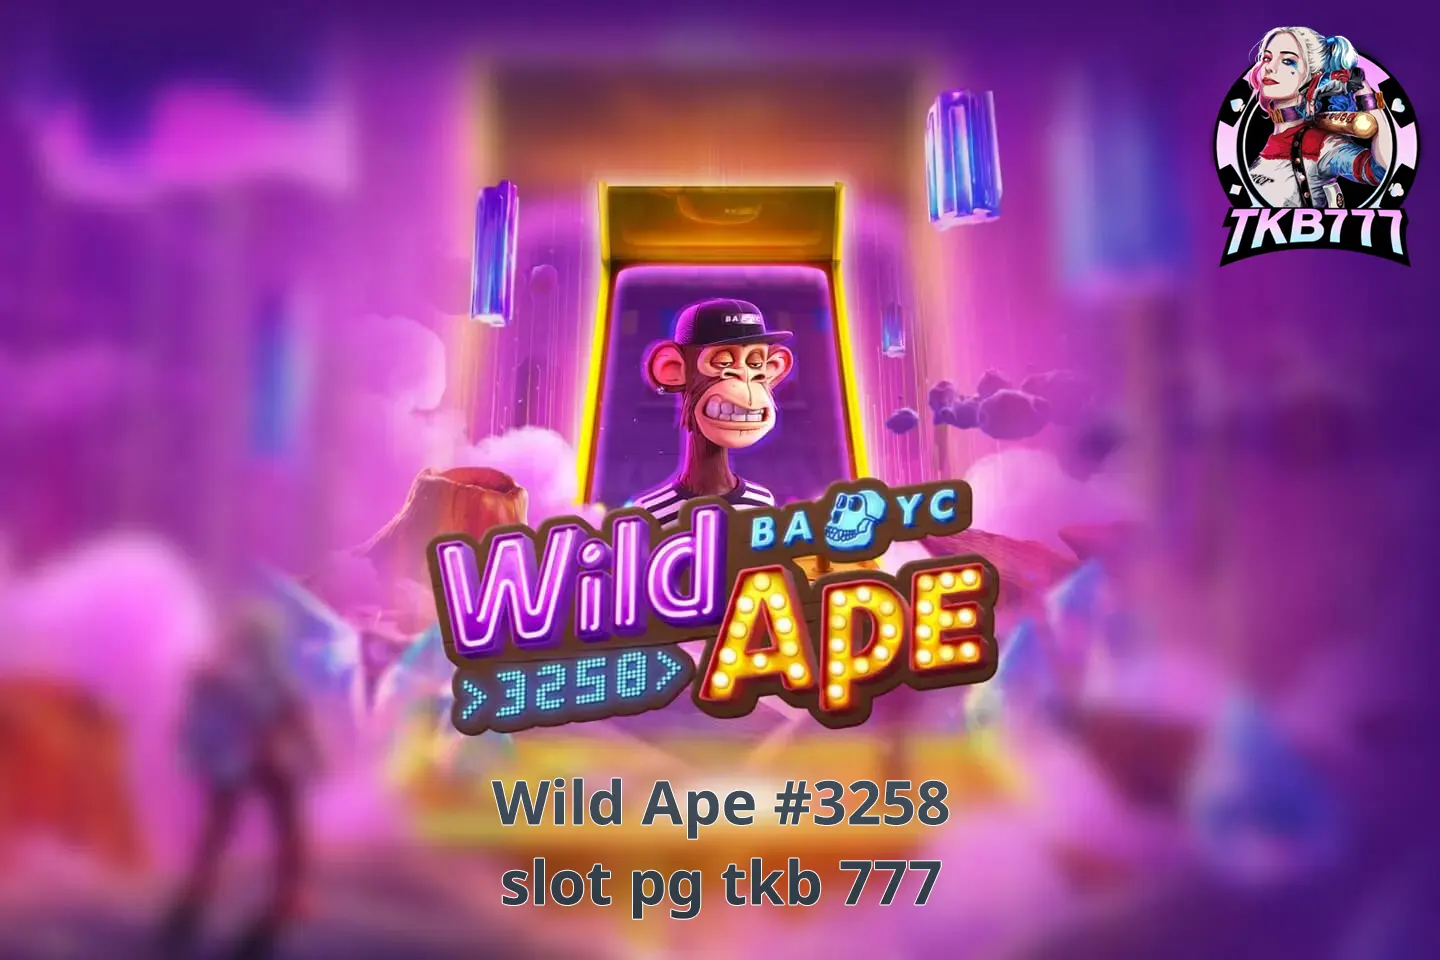 wild ape 3258 slot pg